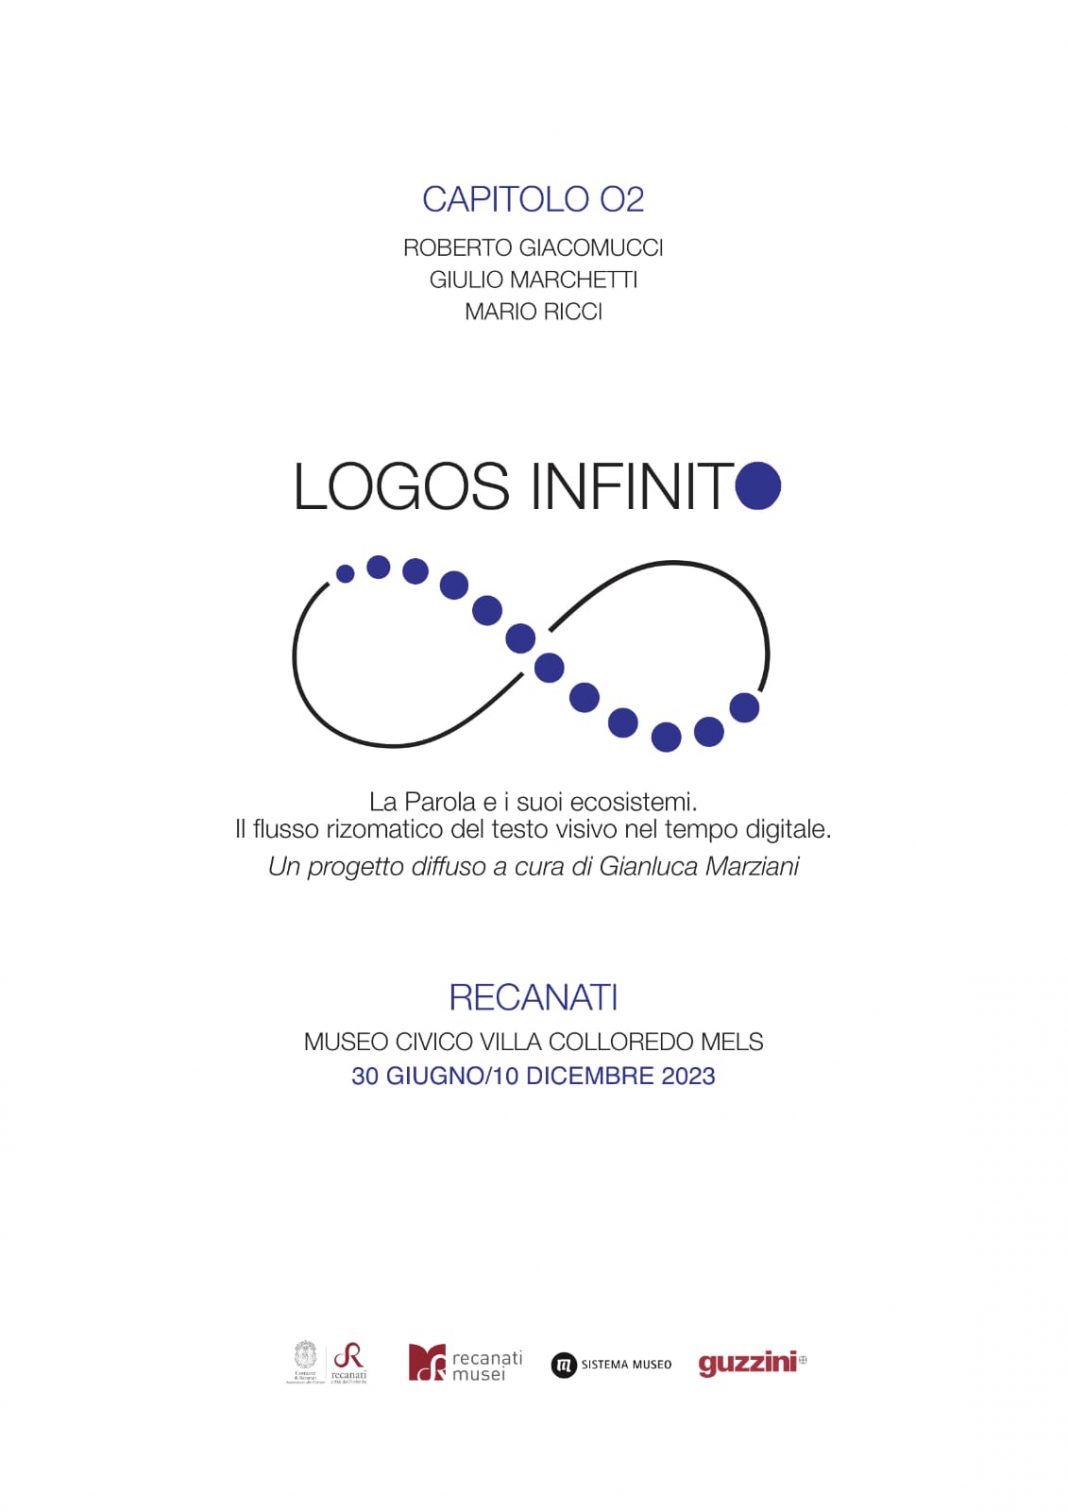 Logos Infinito – Volume 02https://www.exibart.com/repository/media/formidable/11/img/09e/Logos-2-1068x1511.jpeg